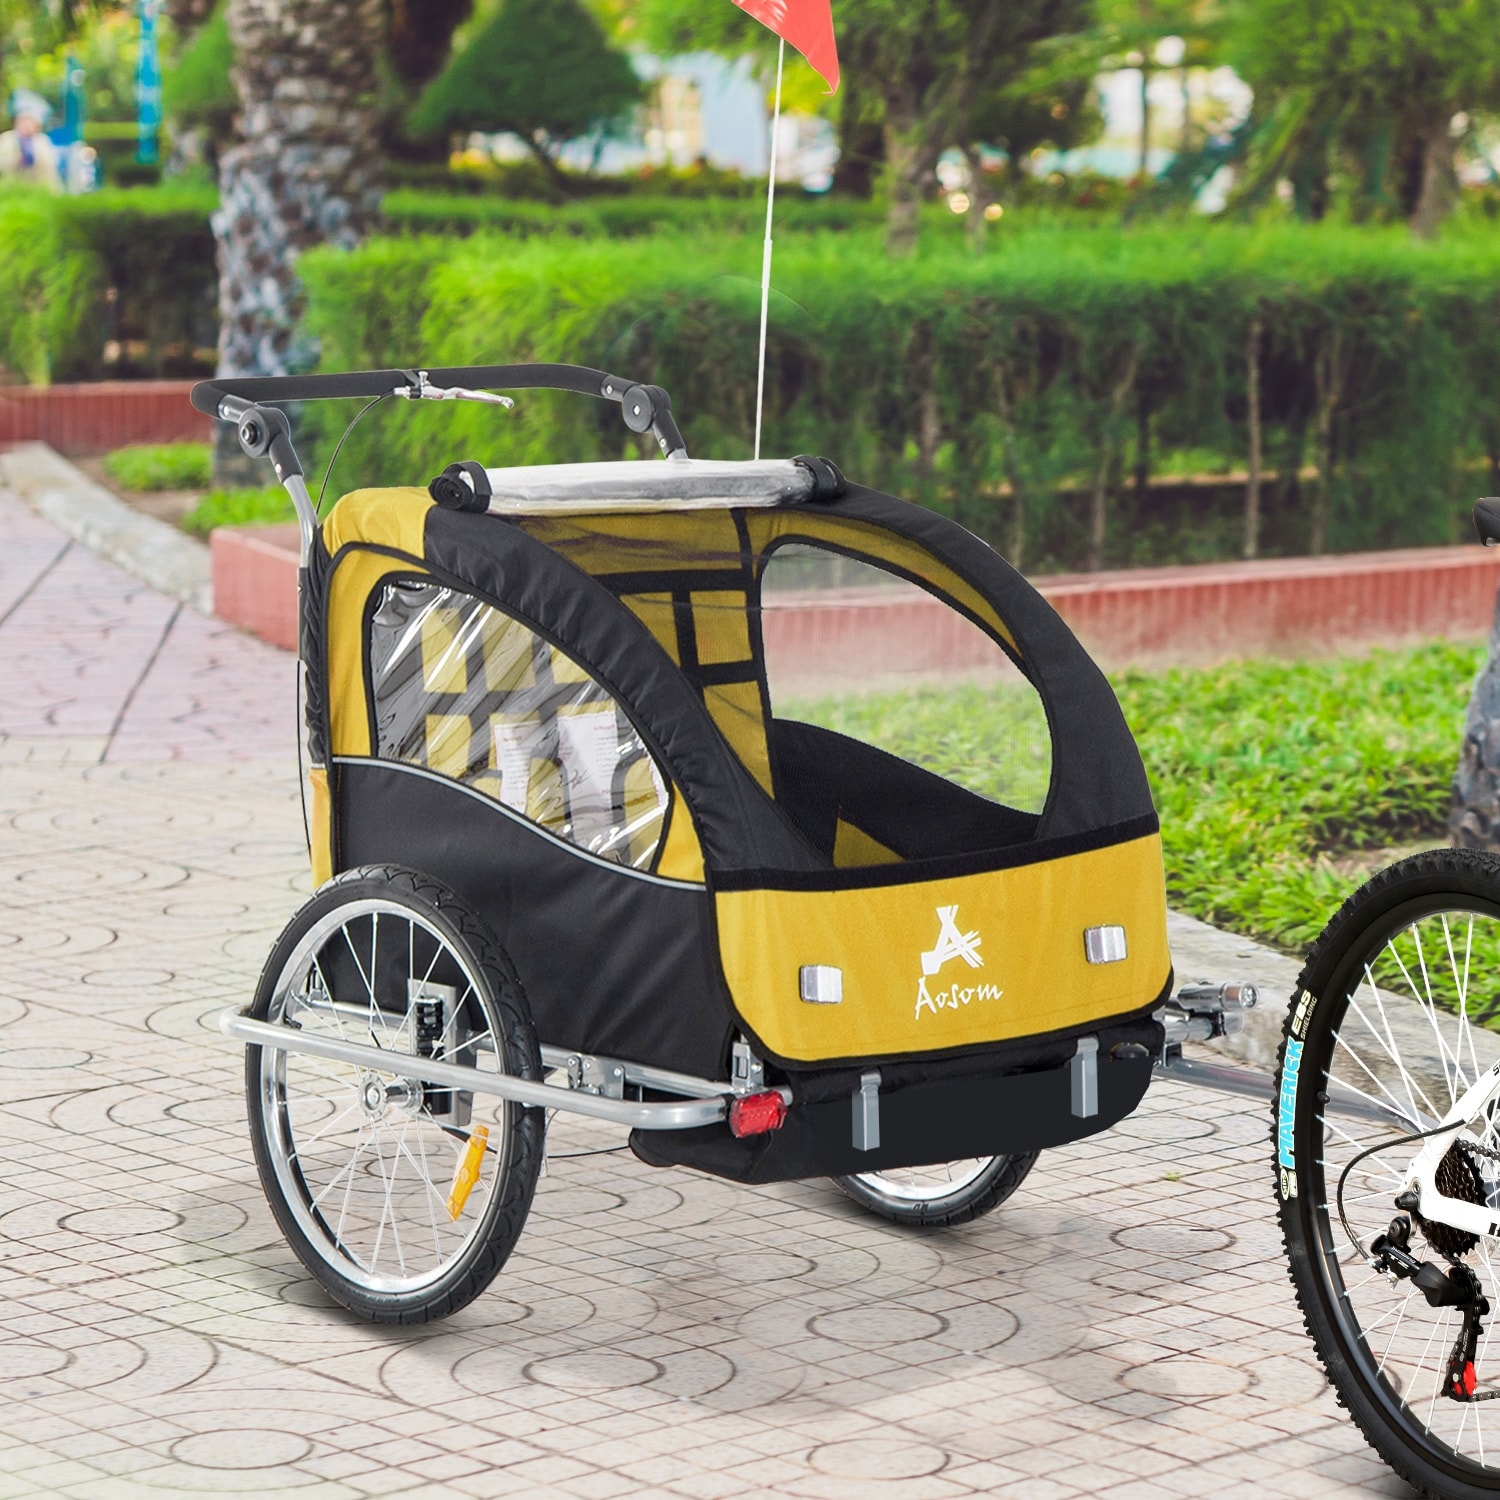 Aosom Elite II 3 in 1 Double Child Bike Trailer and Stroller